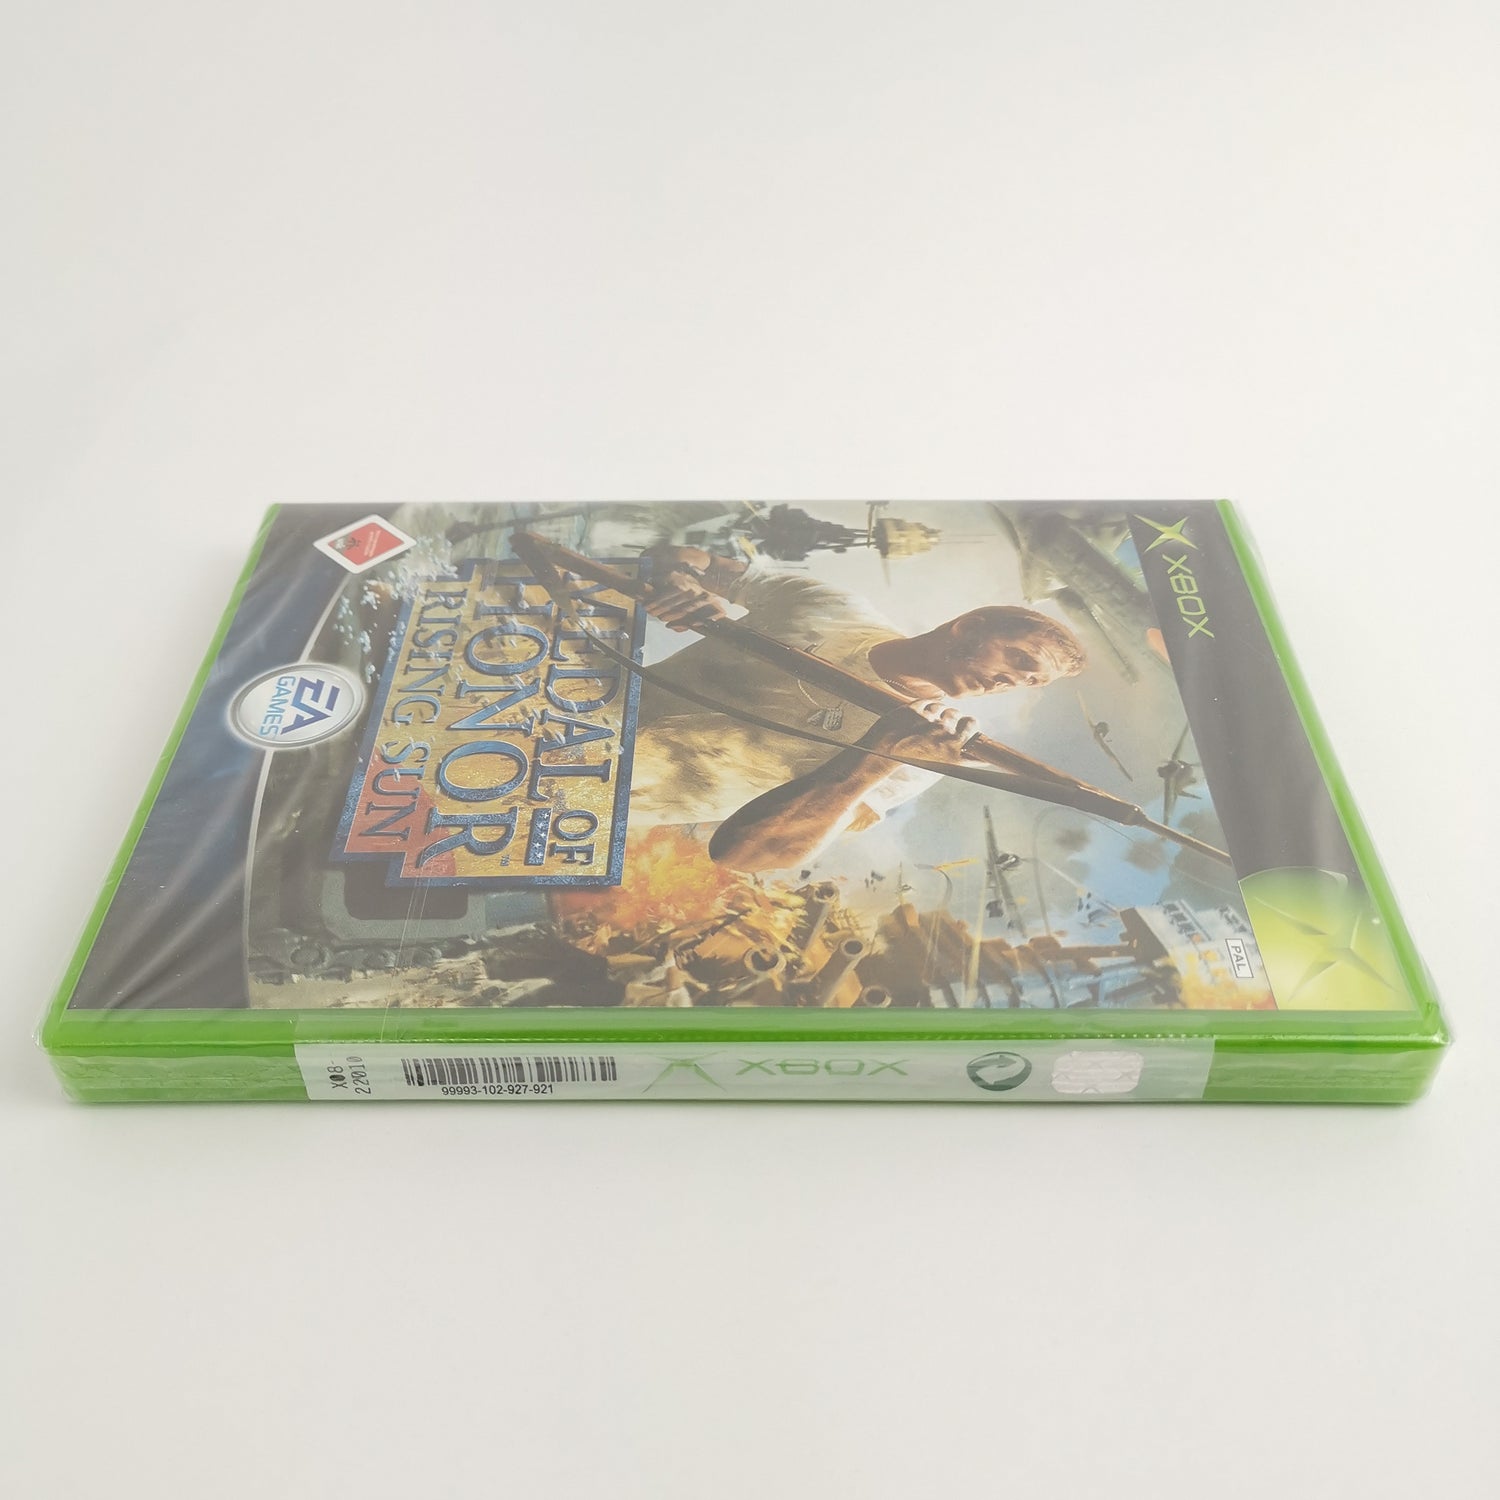 Microsoft Xbox Classic Spiel : Medal of Honor Rising Sun | OVP NEU SEALED USK18